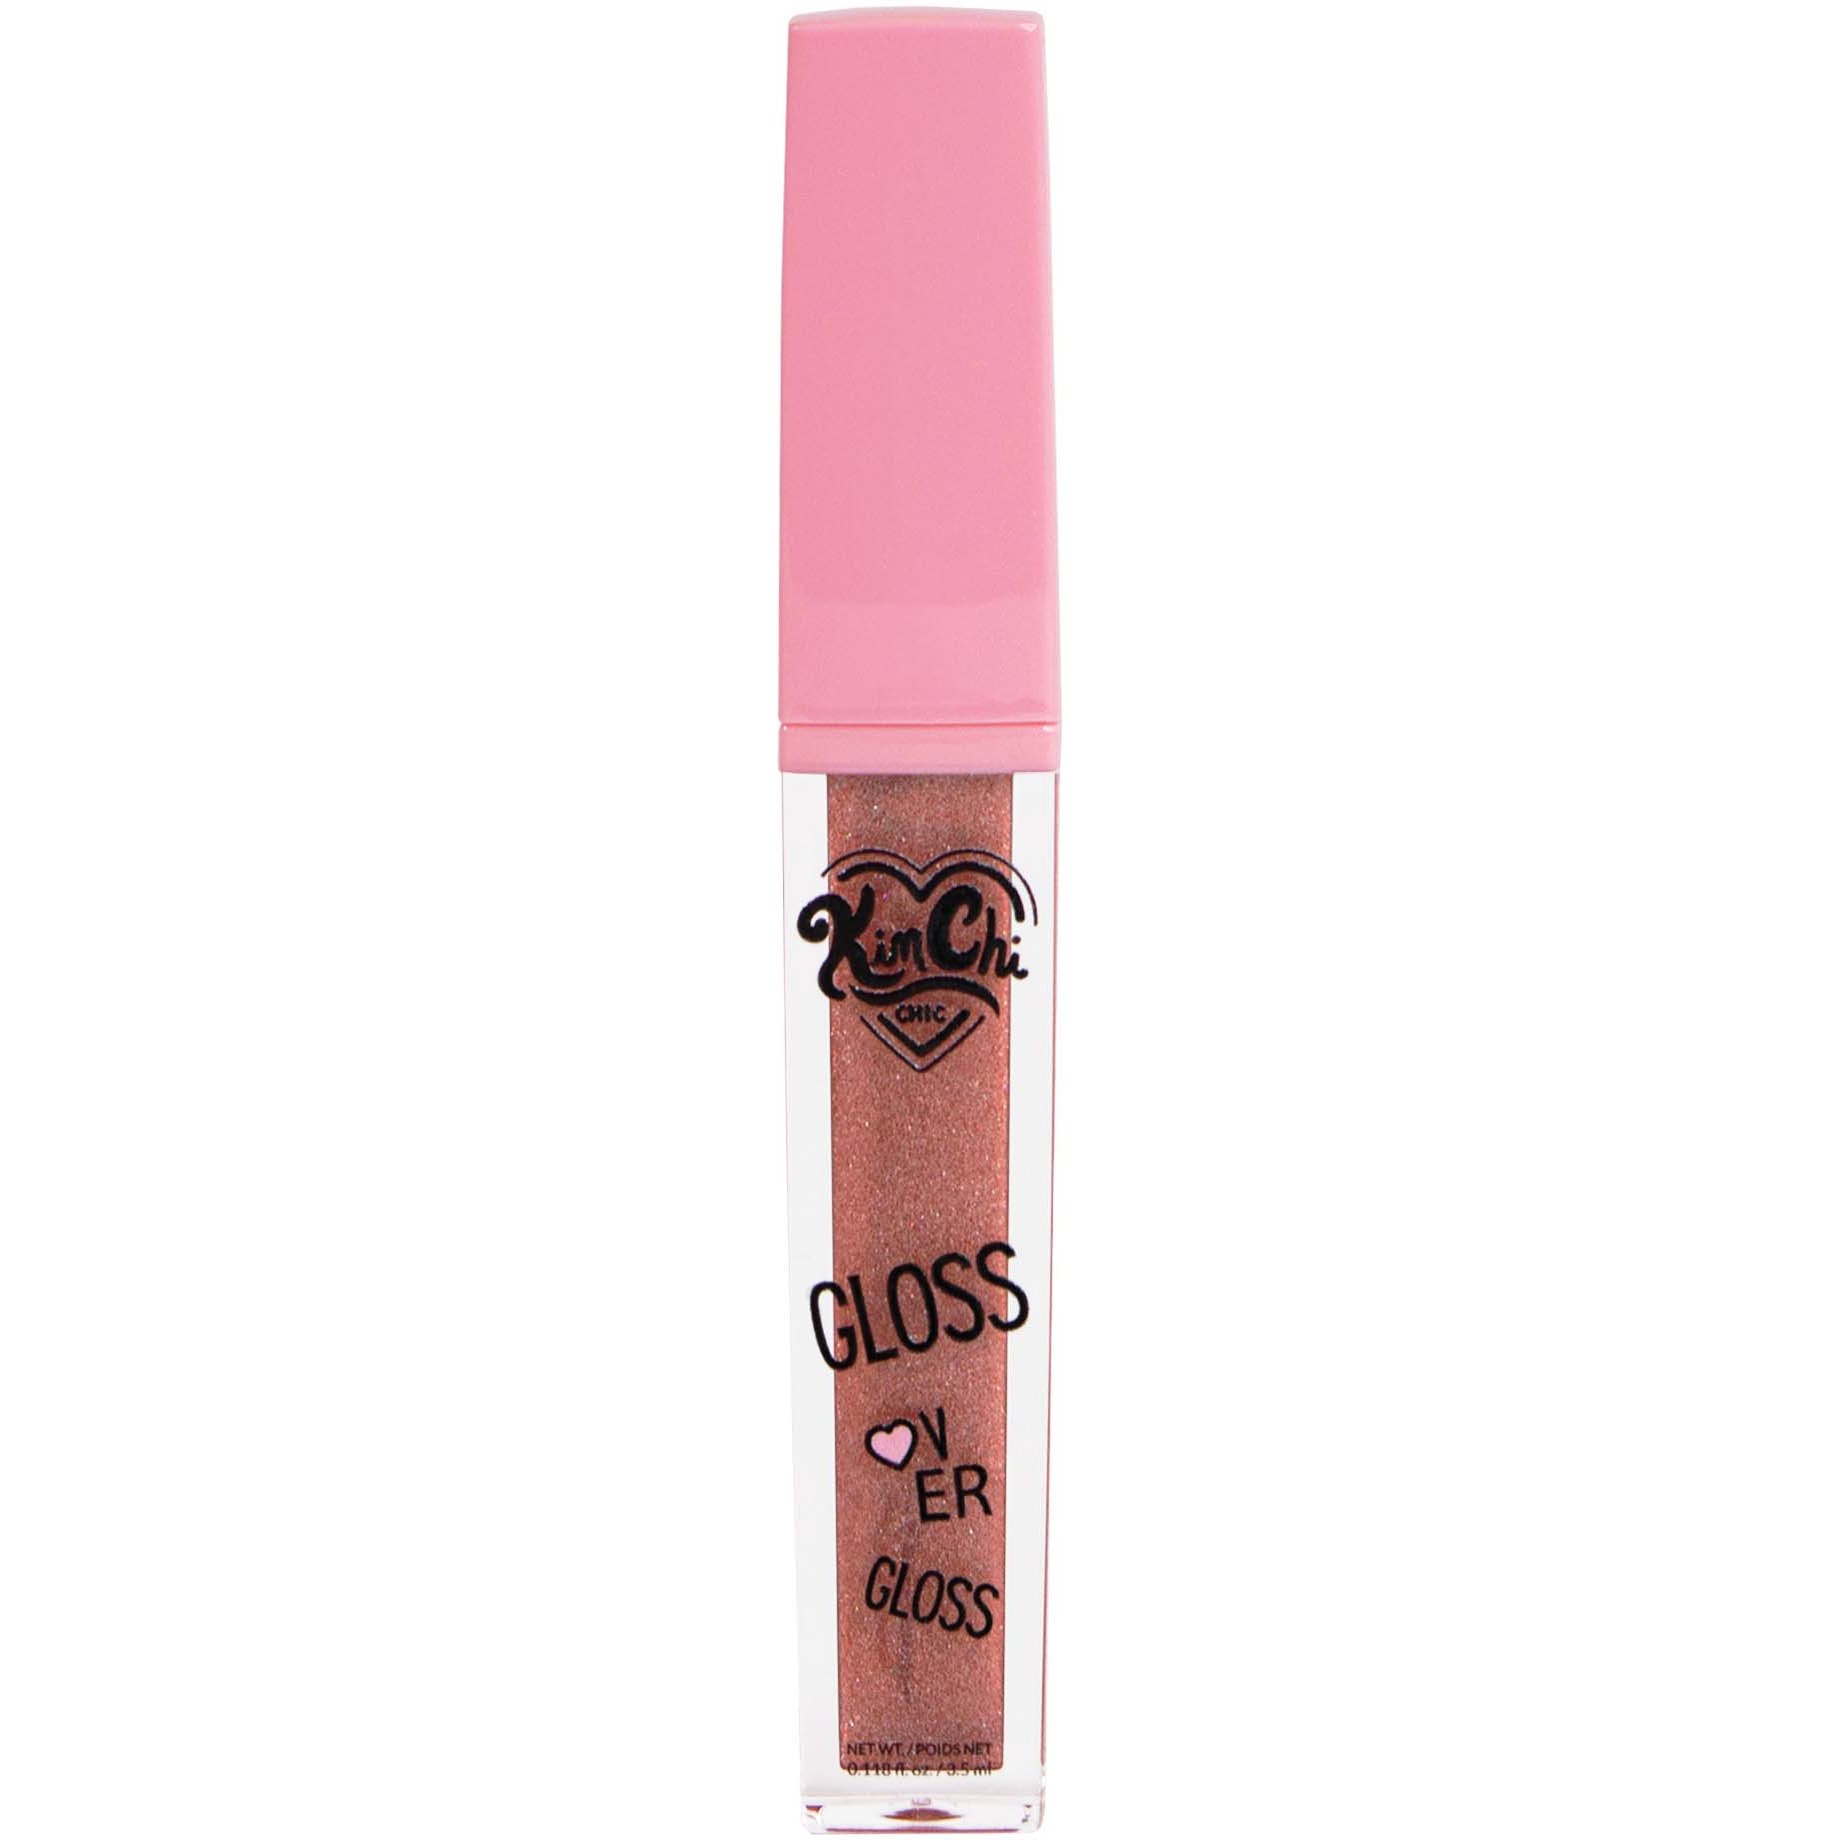 KimChi Chic Gloss Over Gloss Full Coverage Lipgloss Nectar